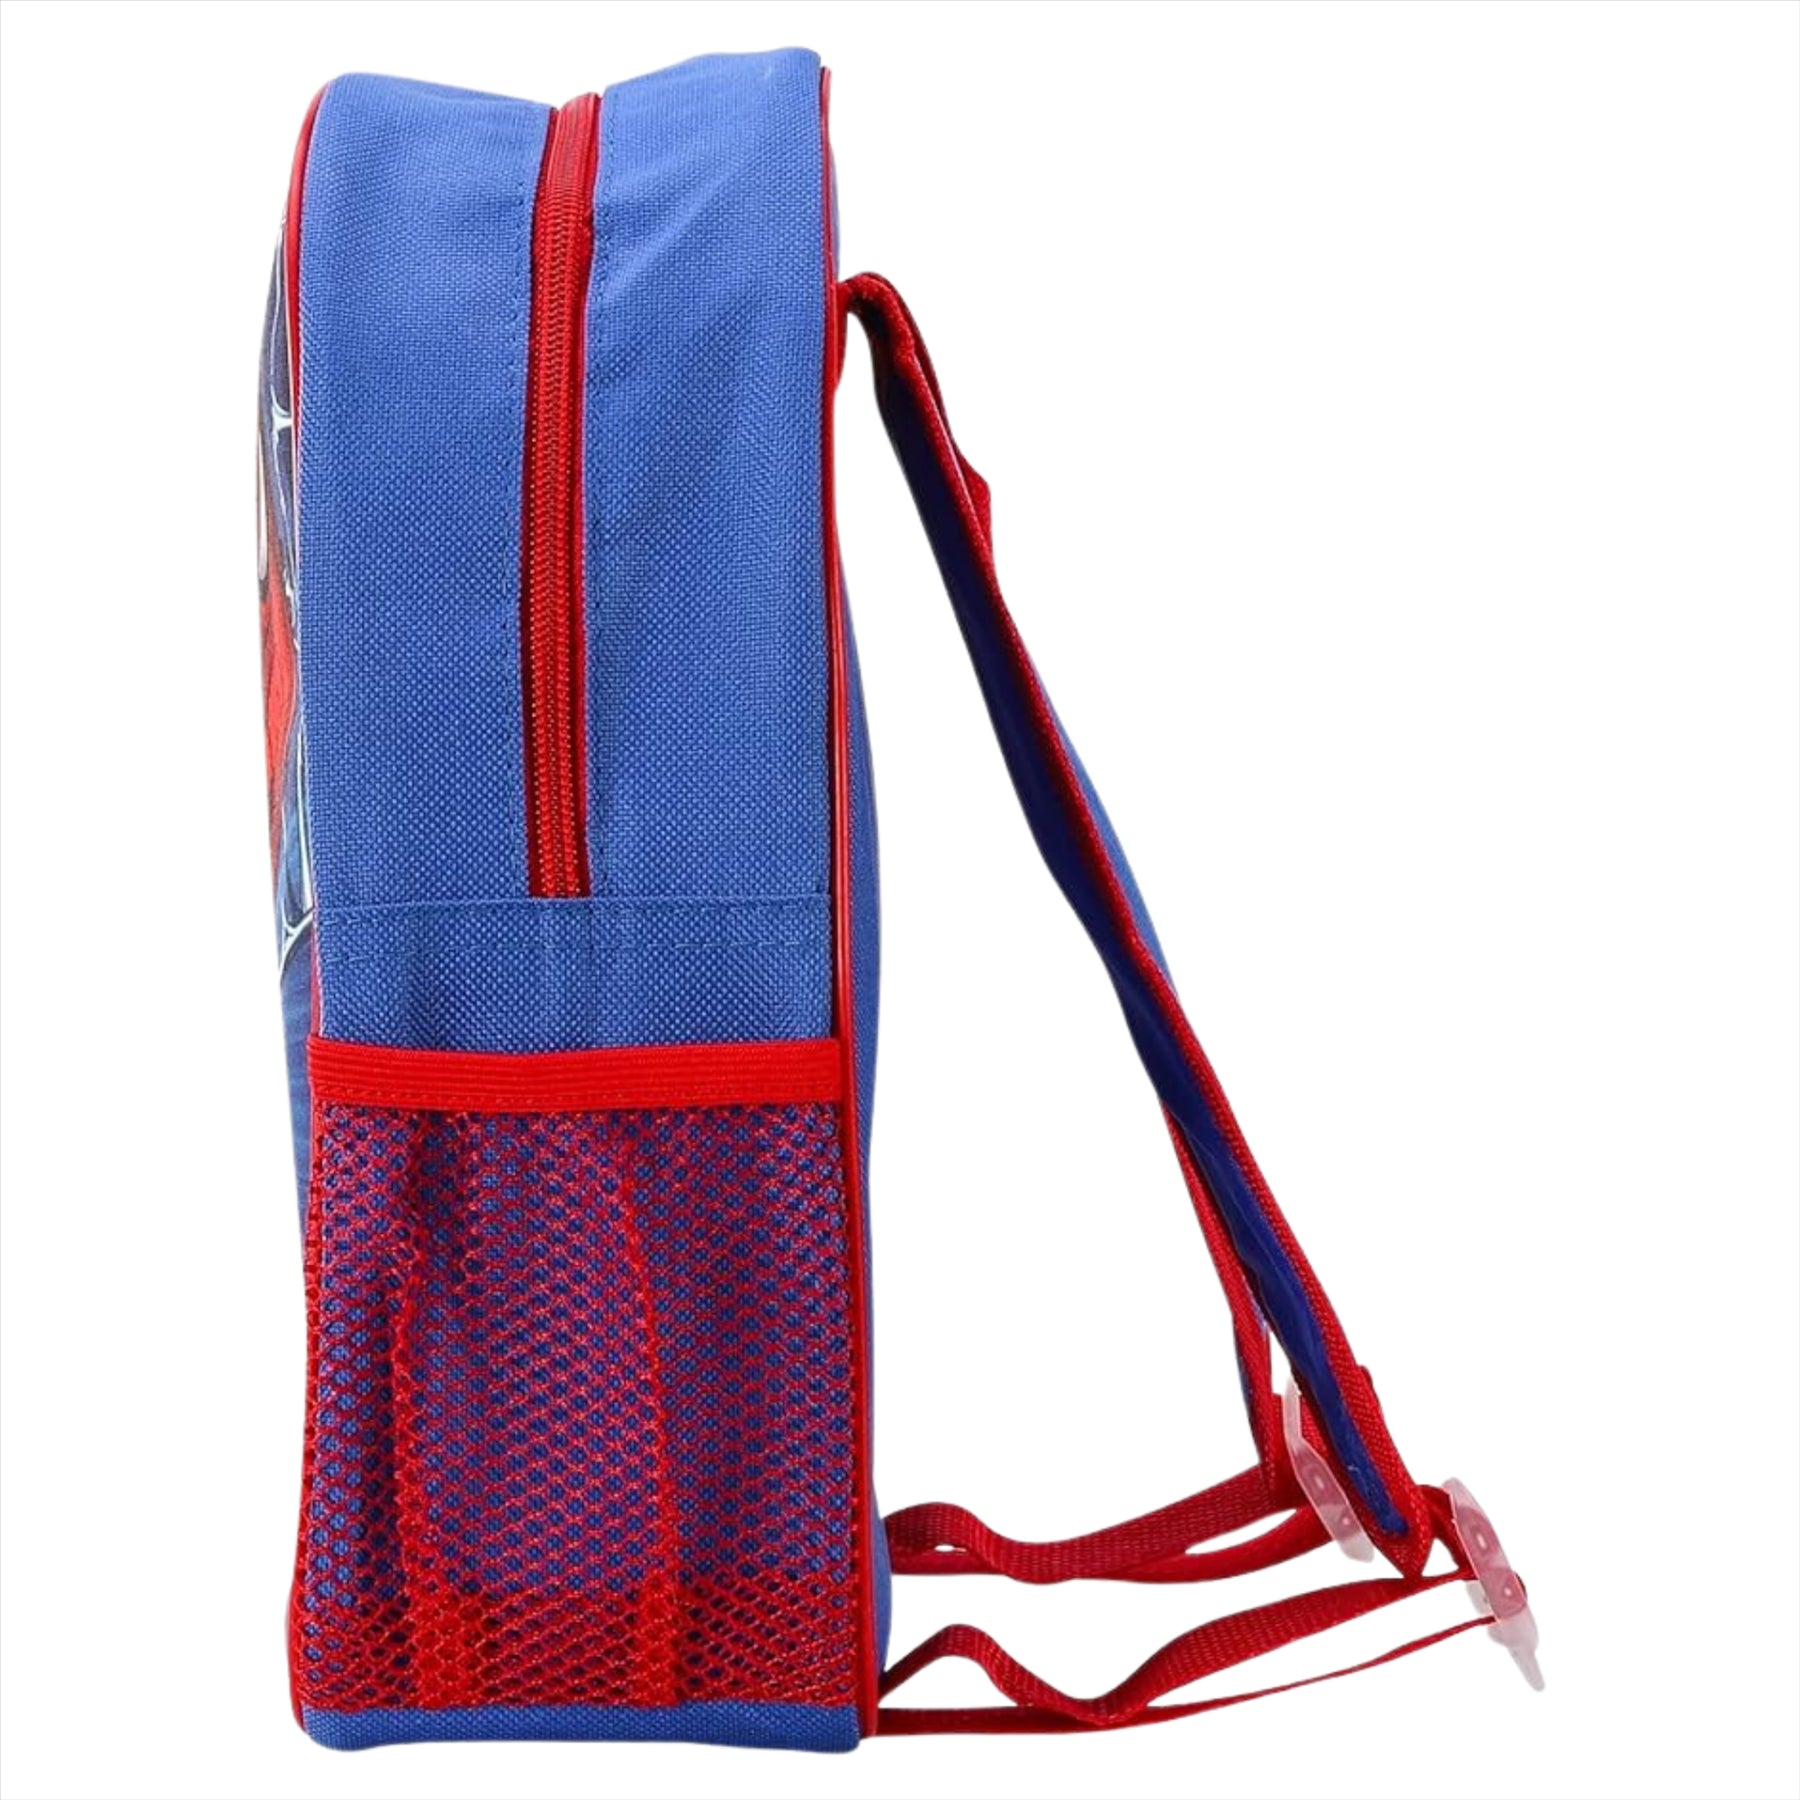 Spiderman Junior Backpack - Kids Character School Bag with Mesh Side Pocket